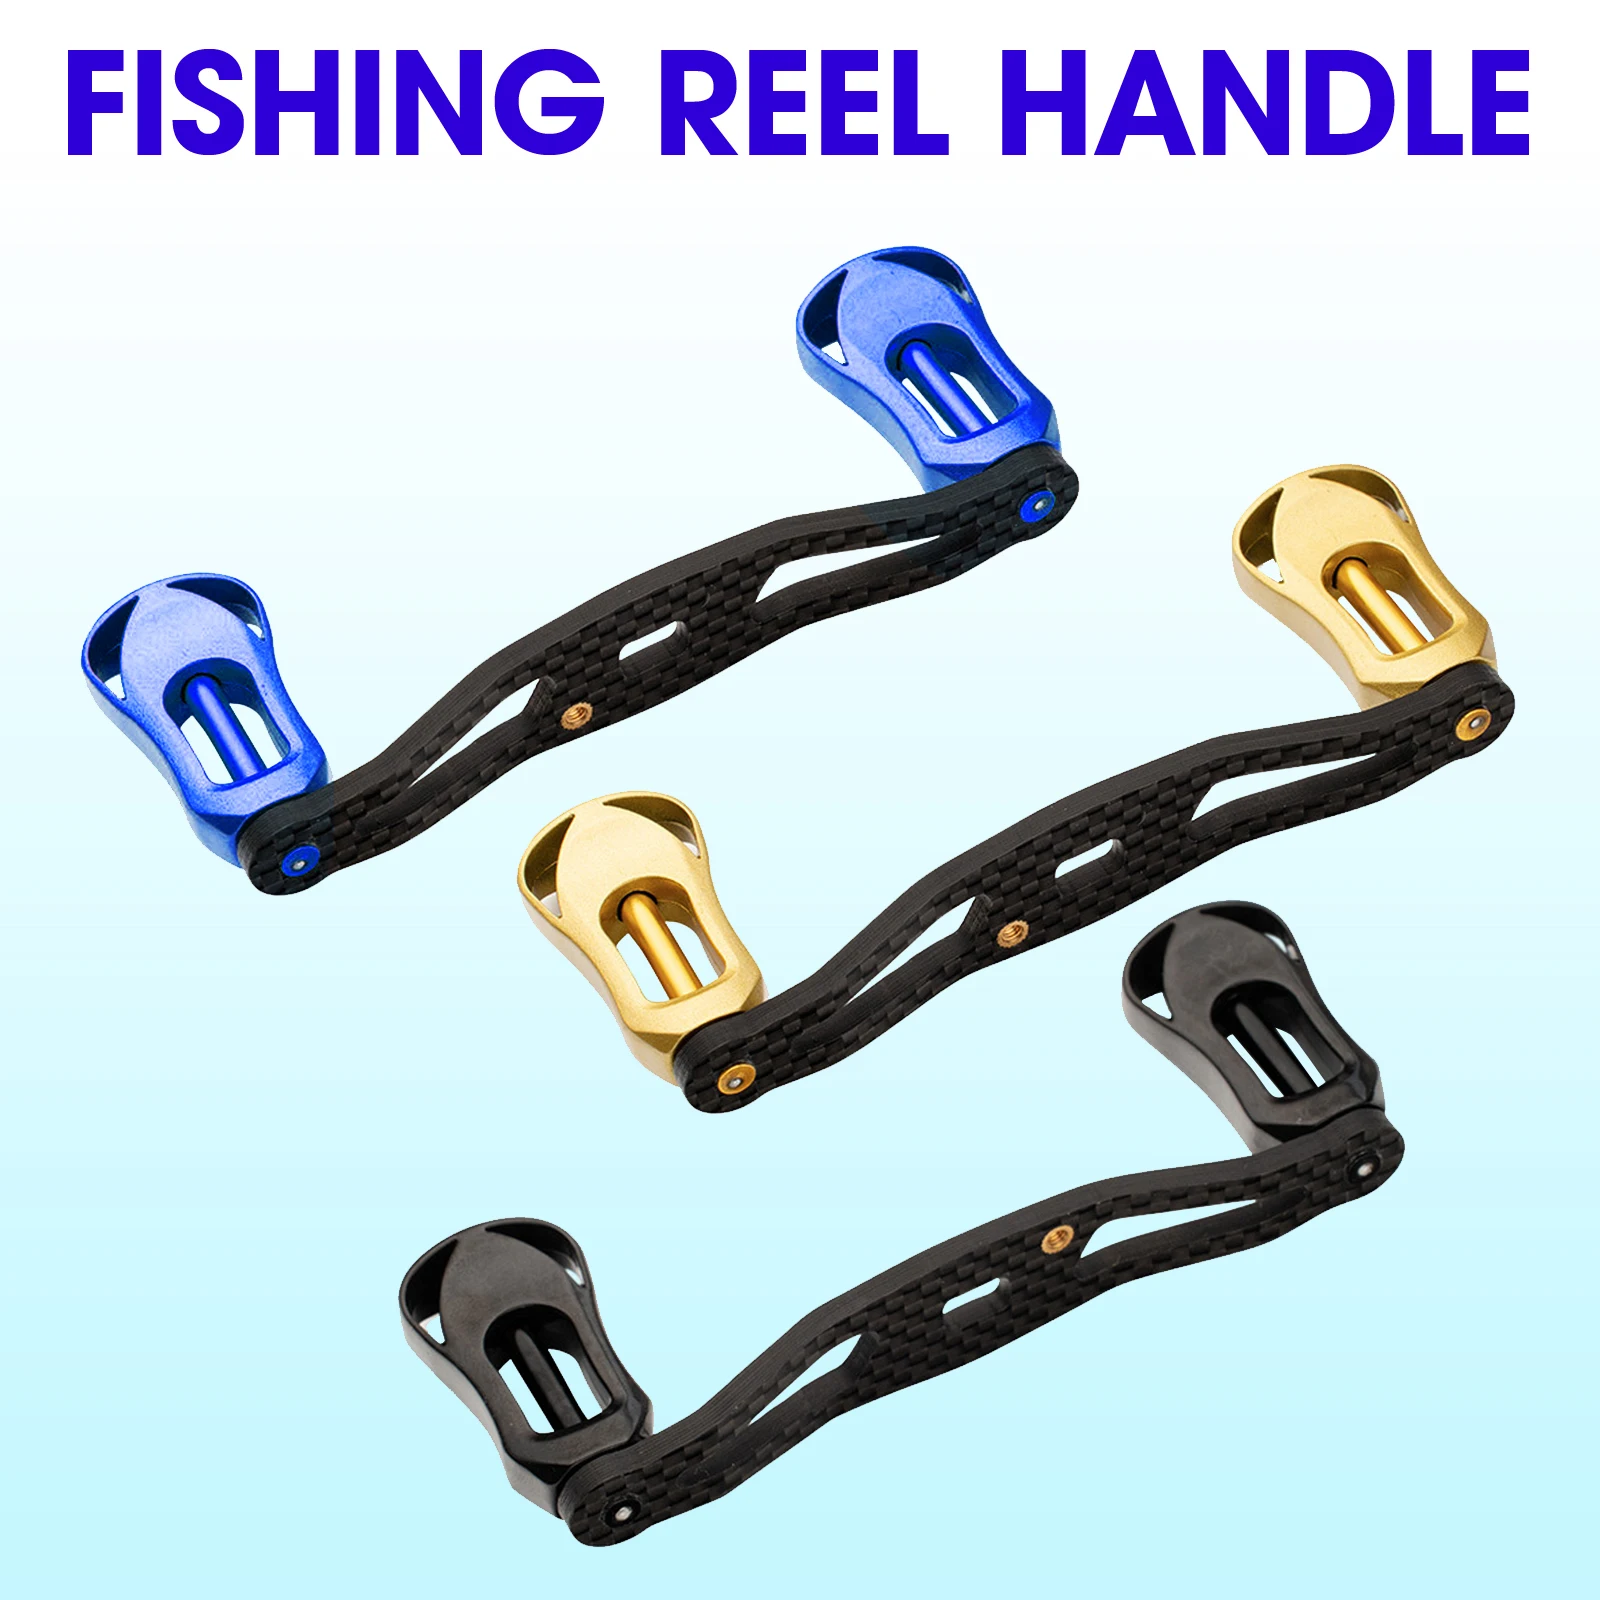 

Fishing Reel Handle Aluminum Alloy for Baitcasting Reel Trolling Reel Handle Ultralight Fishing Reel Crank Accessory Universal